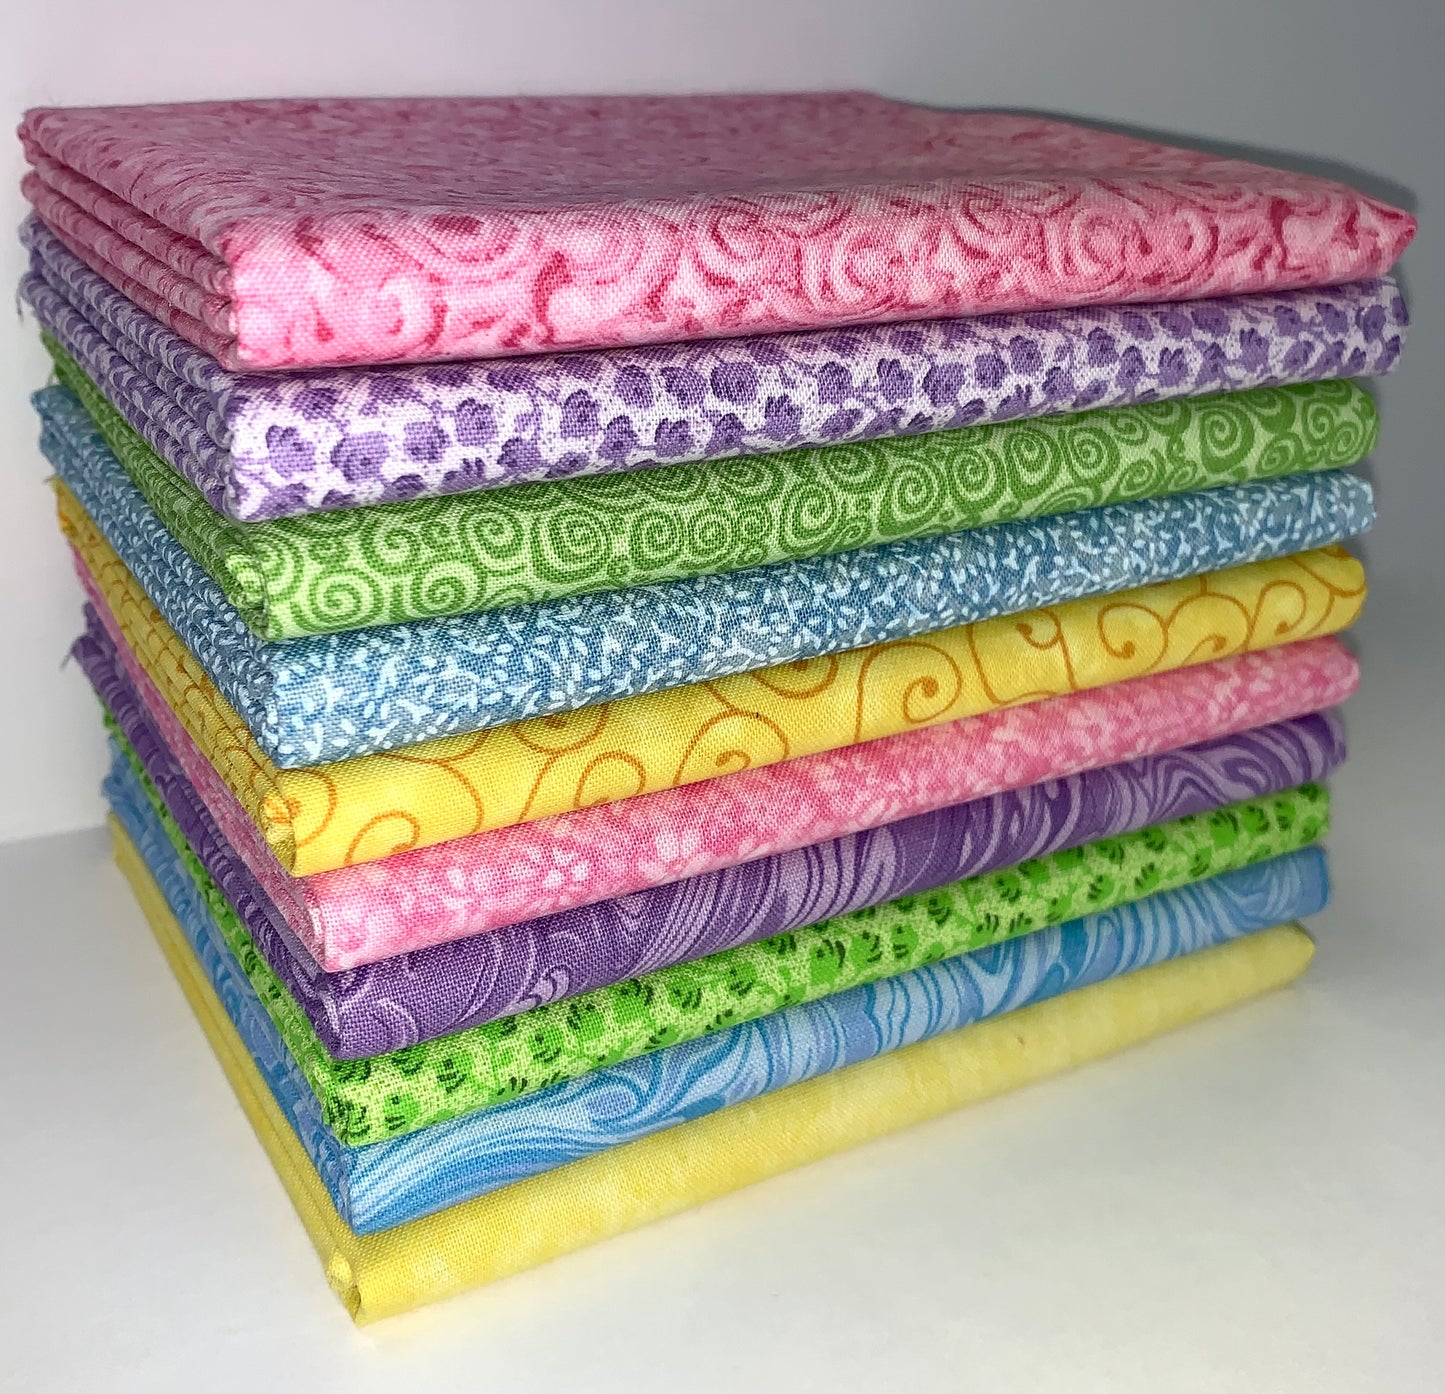 New Pastel Half-yard Bundle - 10 Fabrics, 5 Total Yards